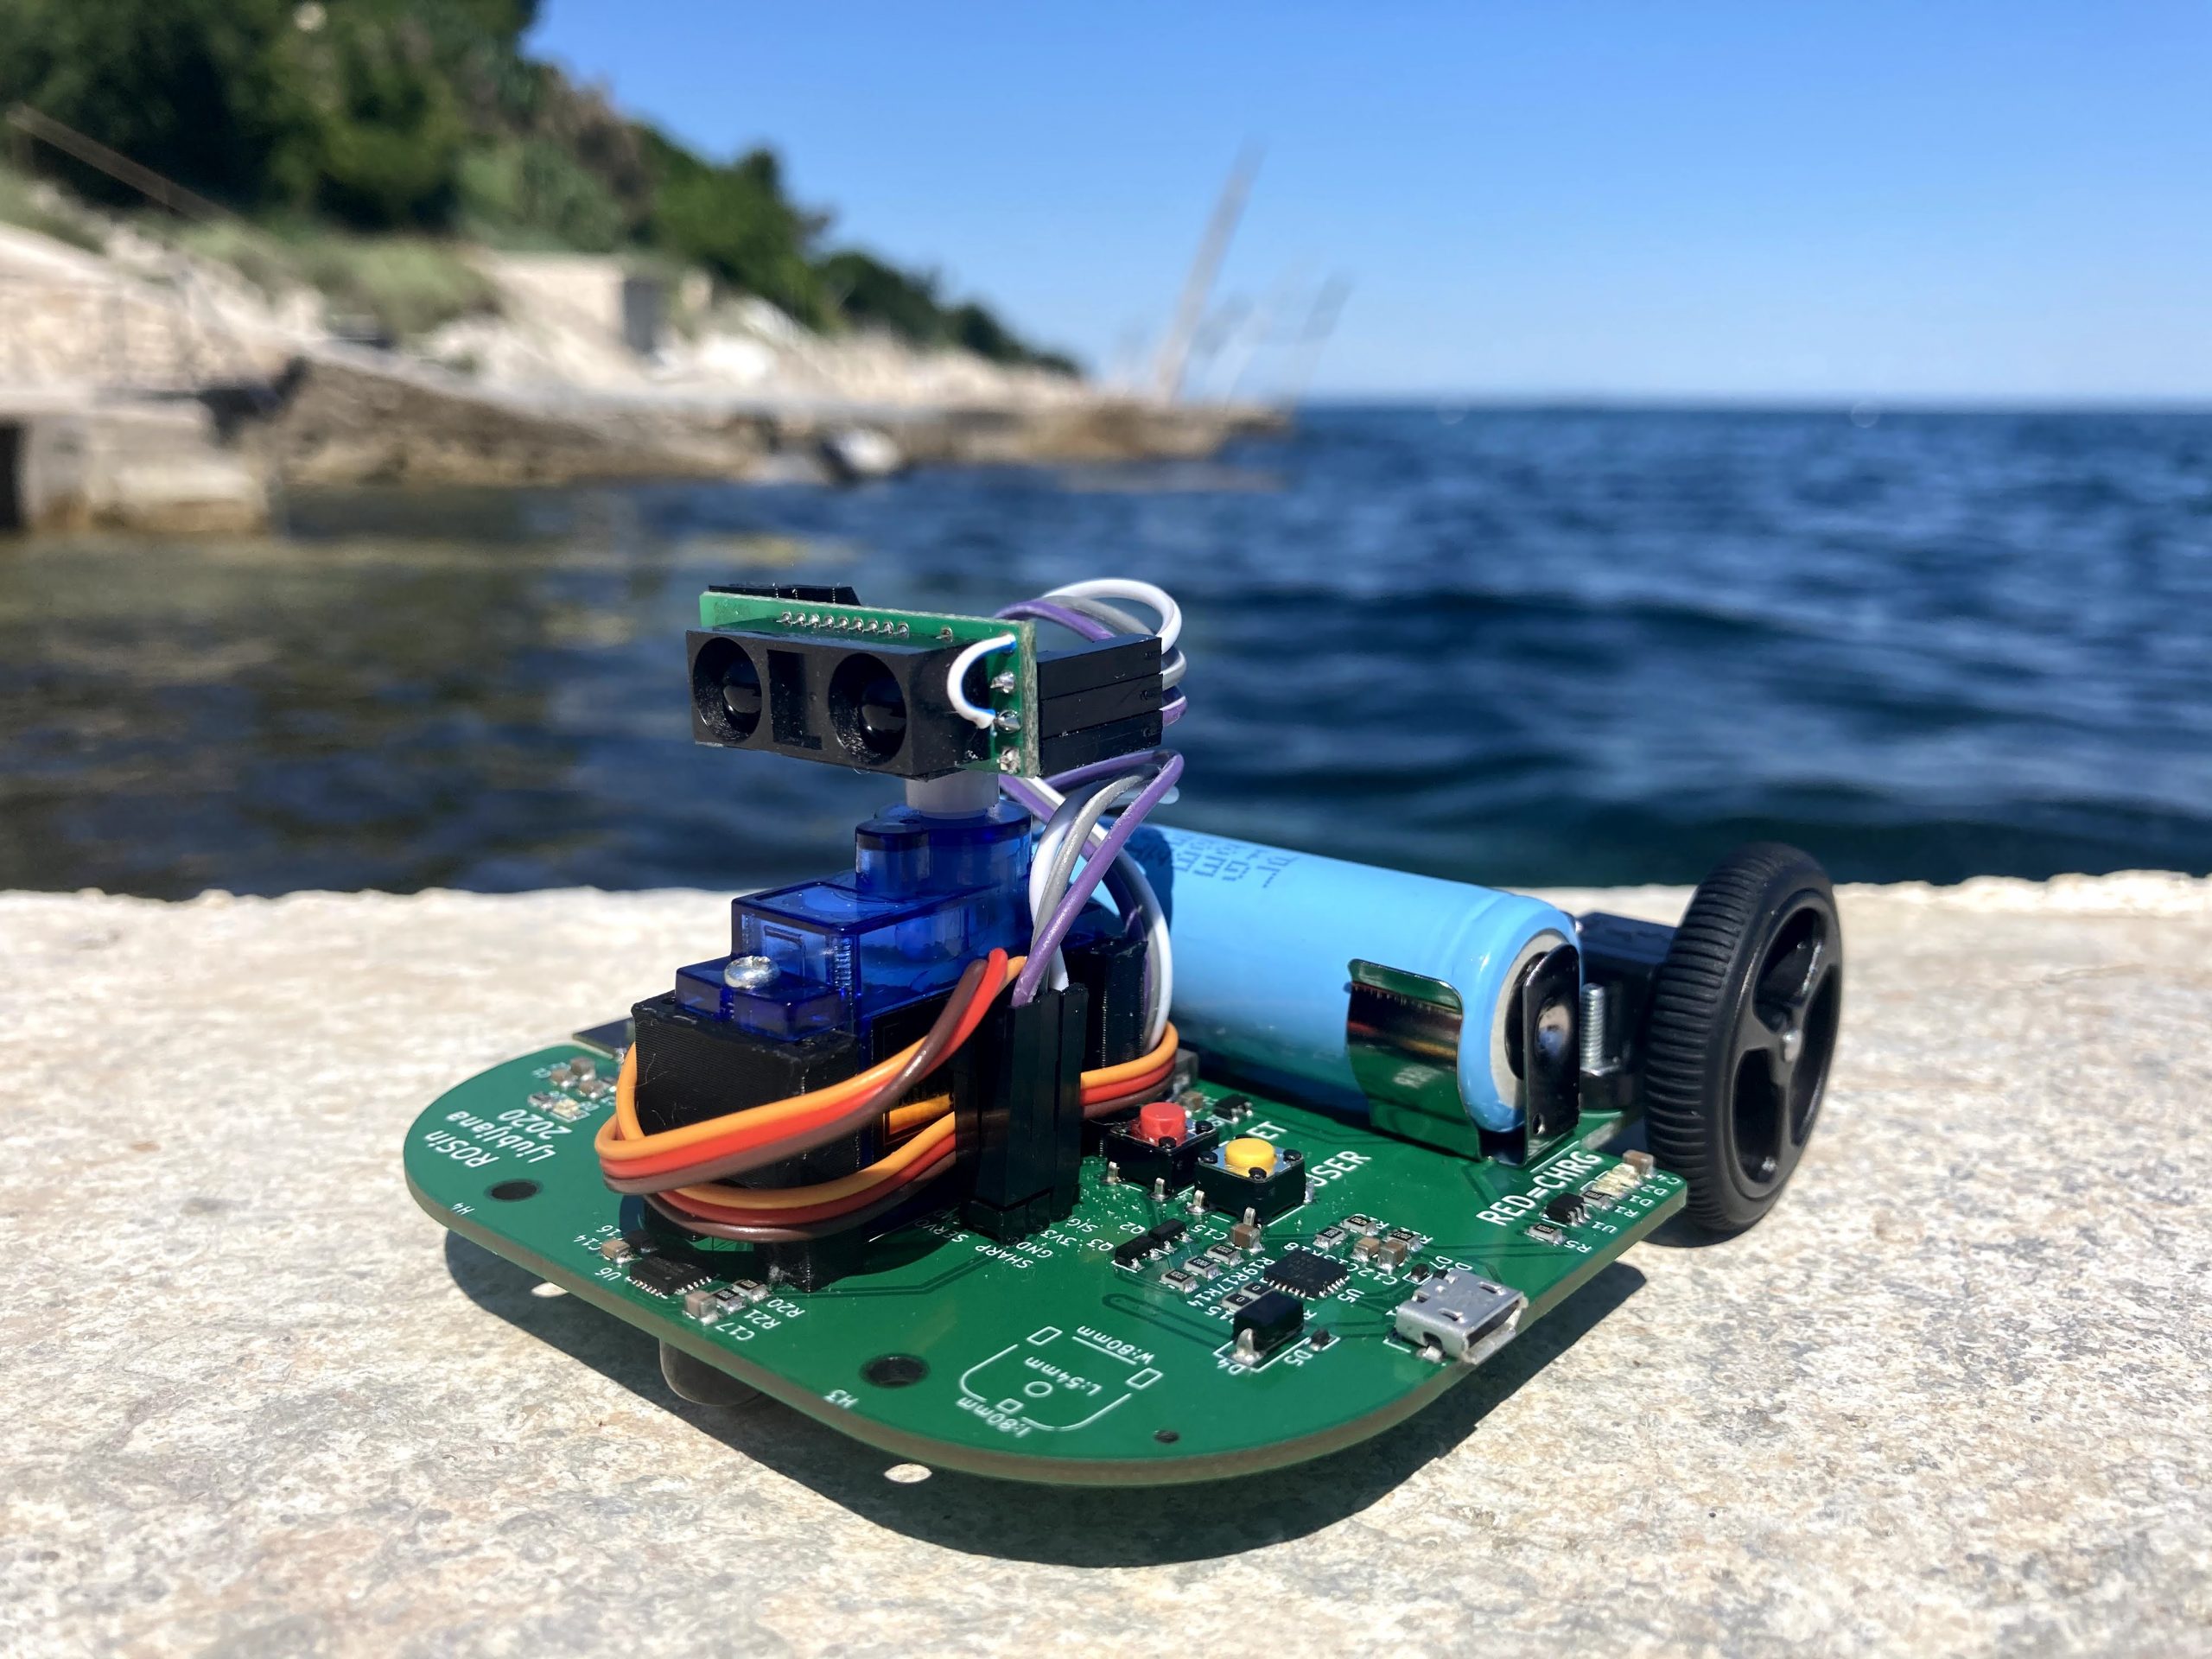 Mobile robot kit